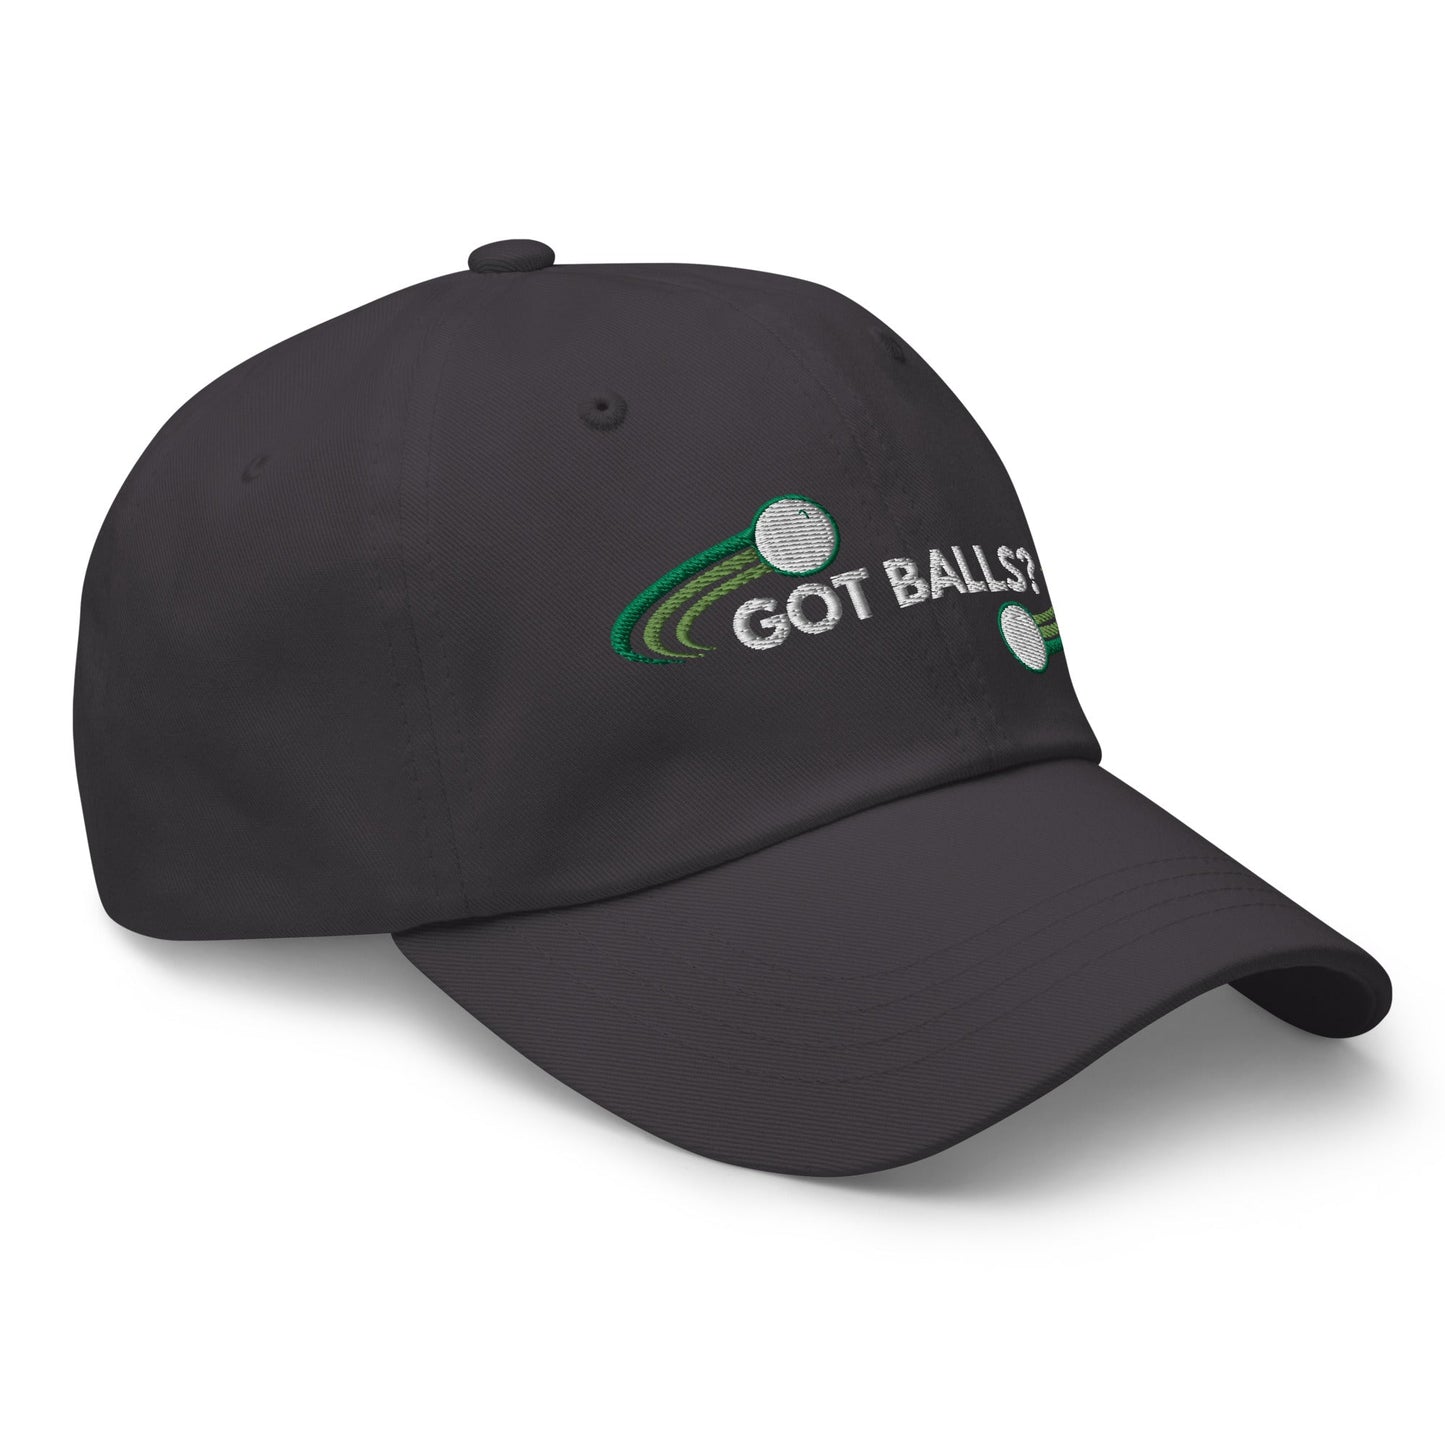 Funny Golfer Gifts  Dad Cap Dark Grey Got Balls Cap